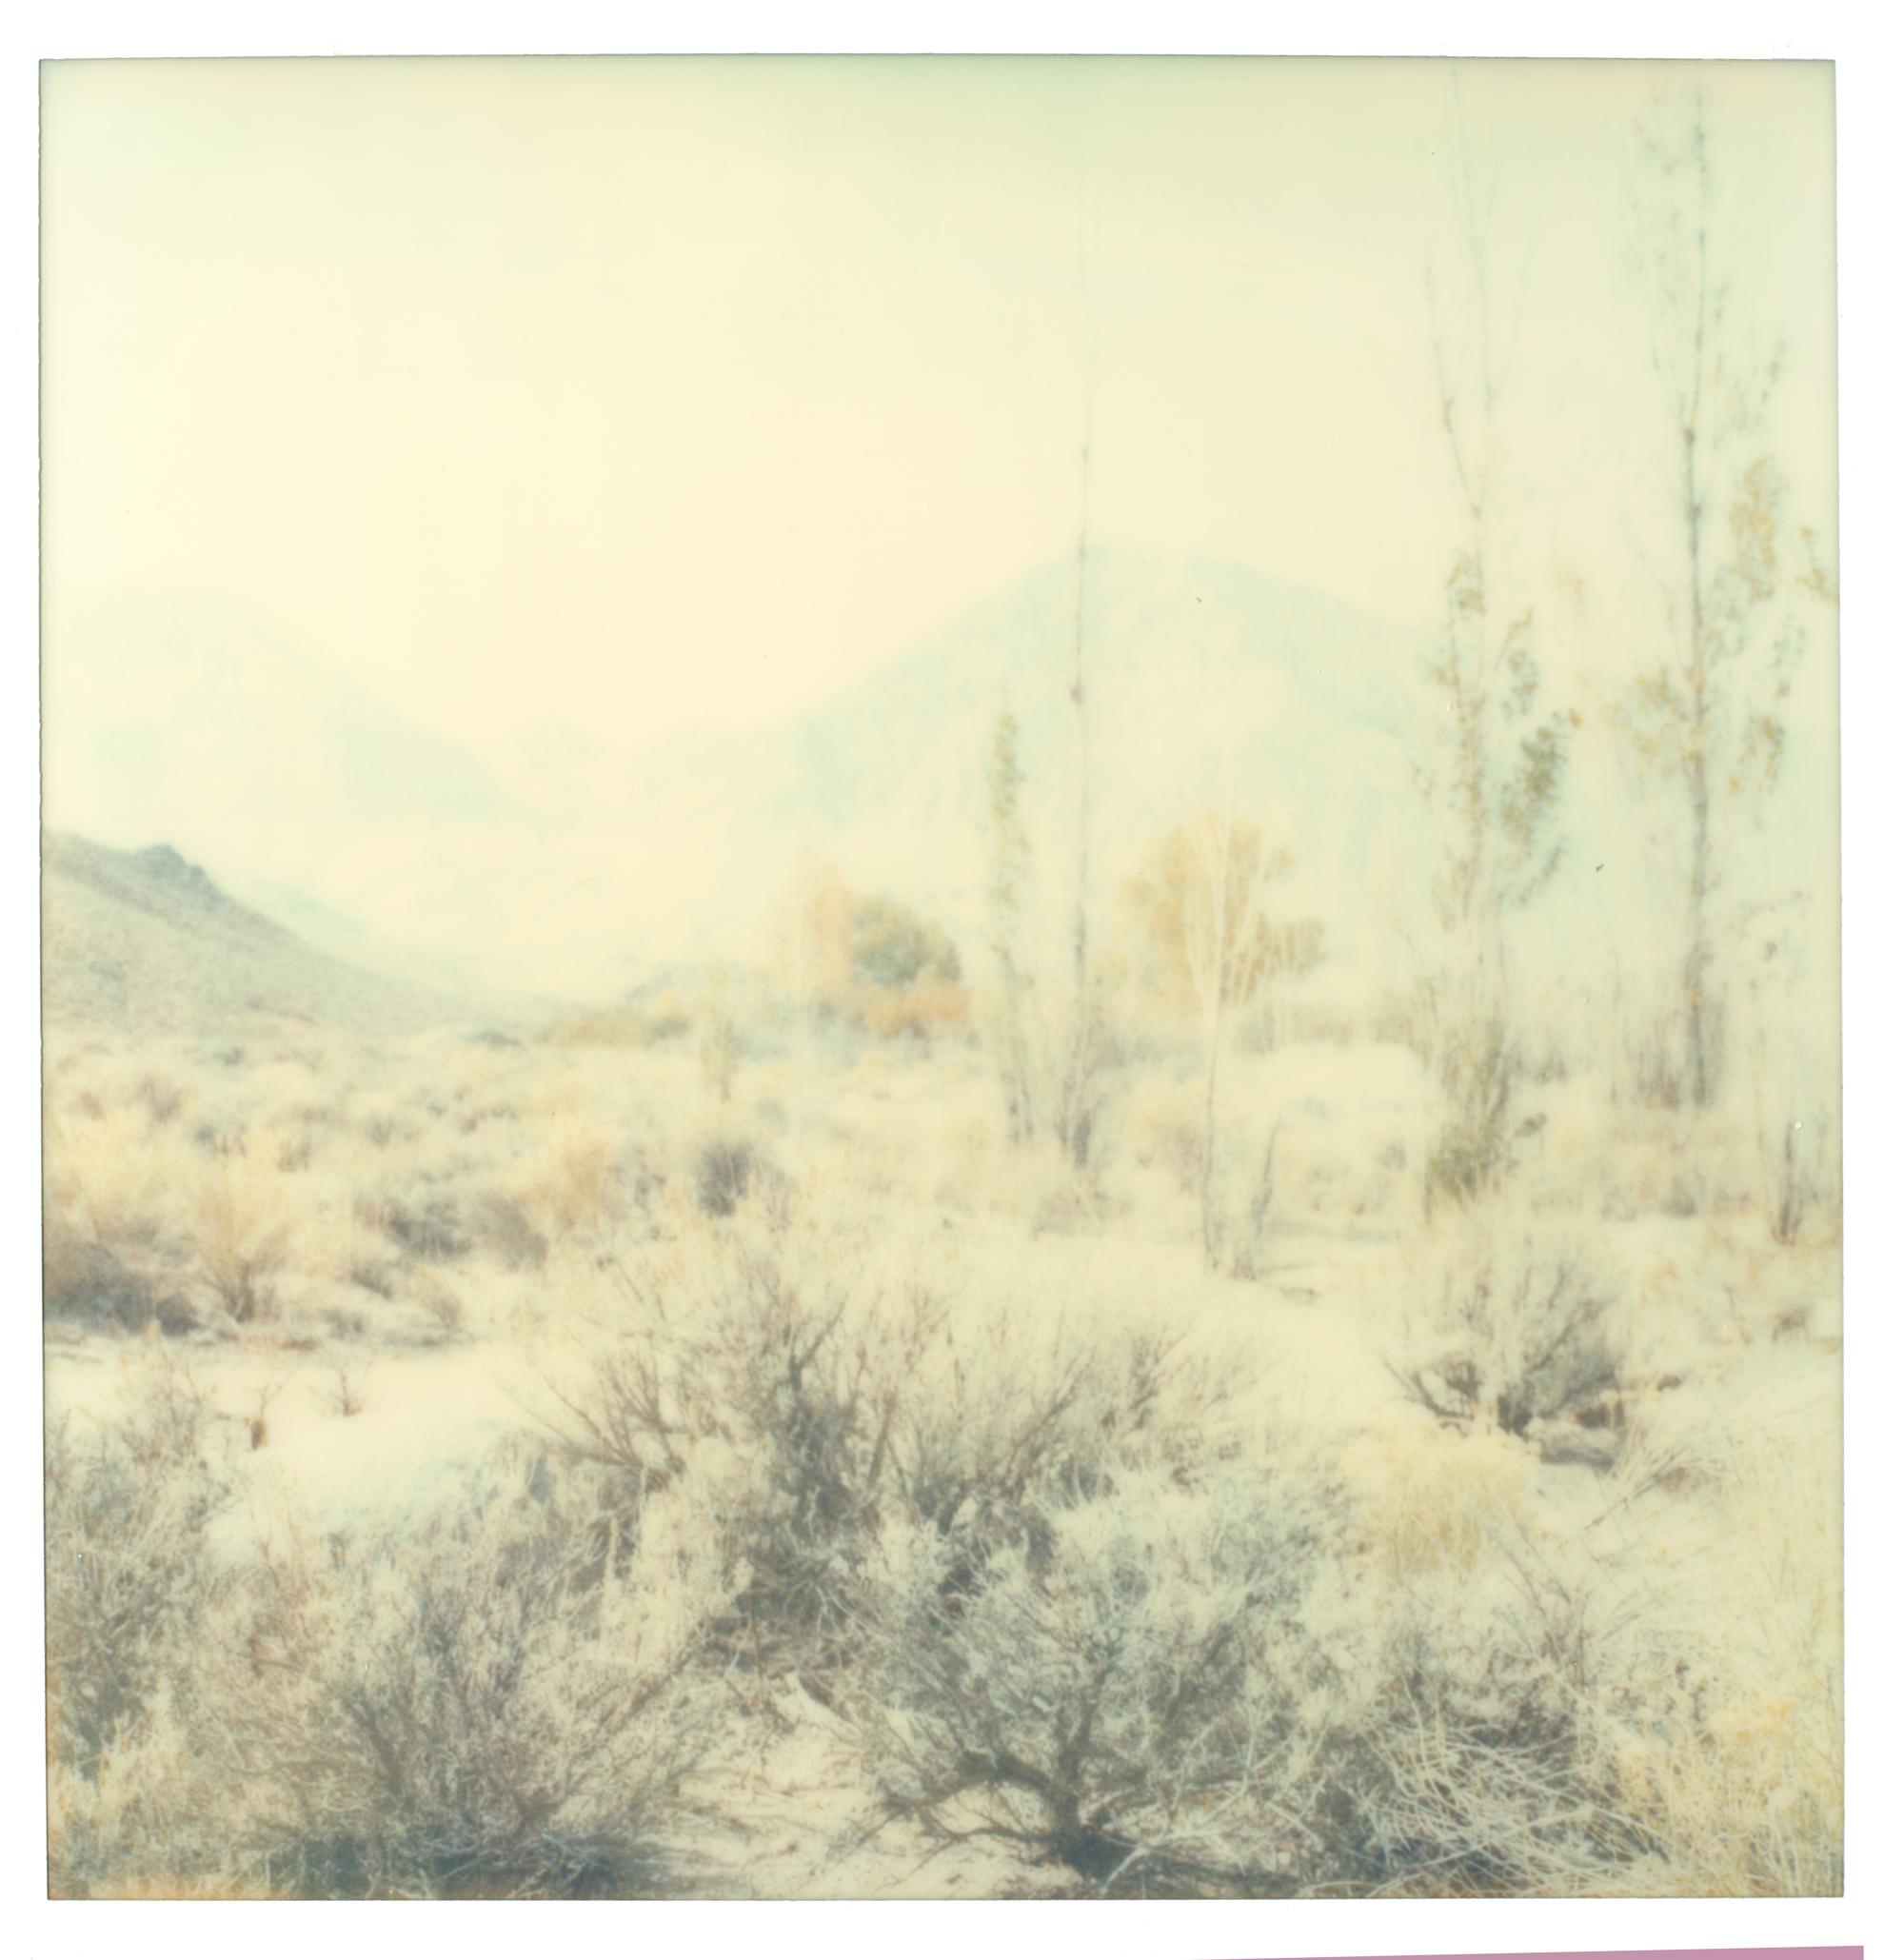 Stefanie Schneider Landscape Photograph - Wastelands - Polaroid, Expired. Contemporary, Color